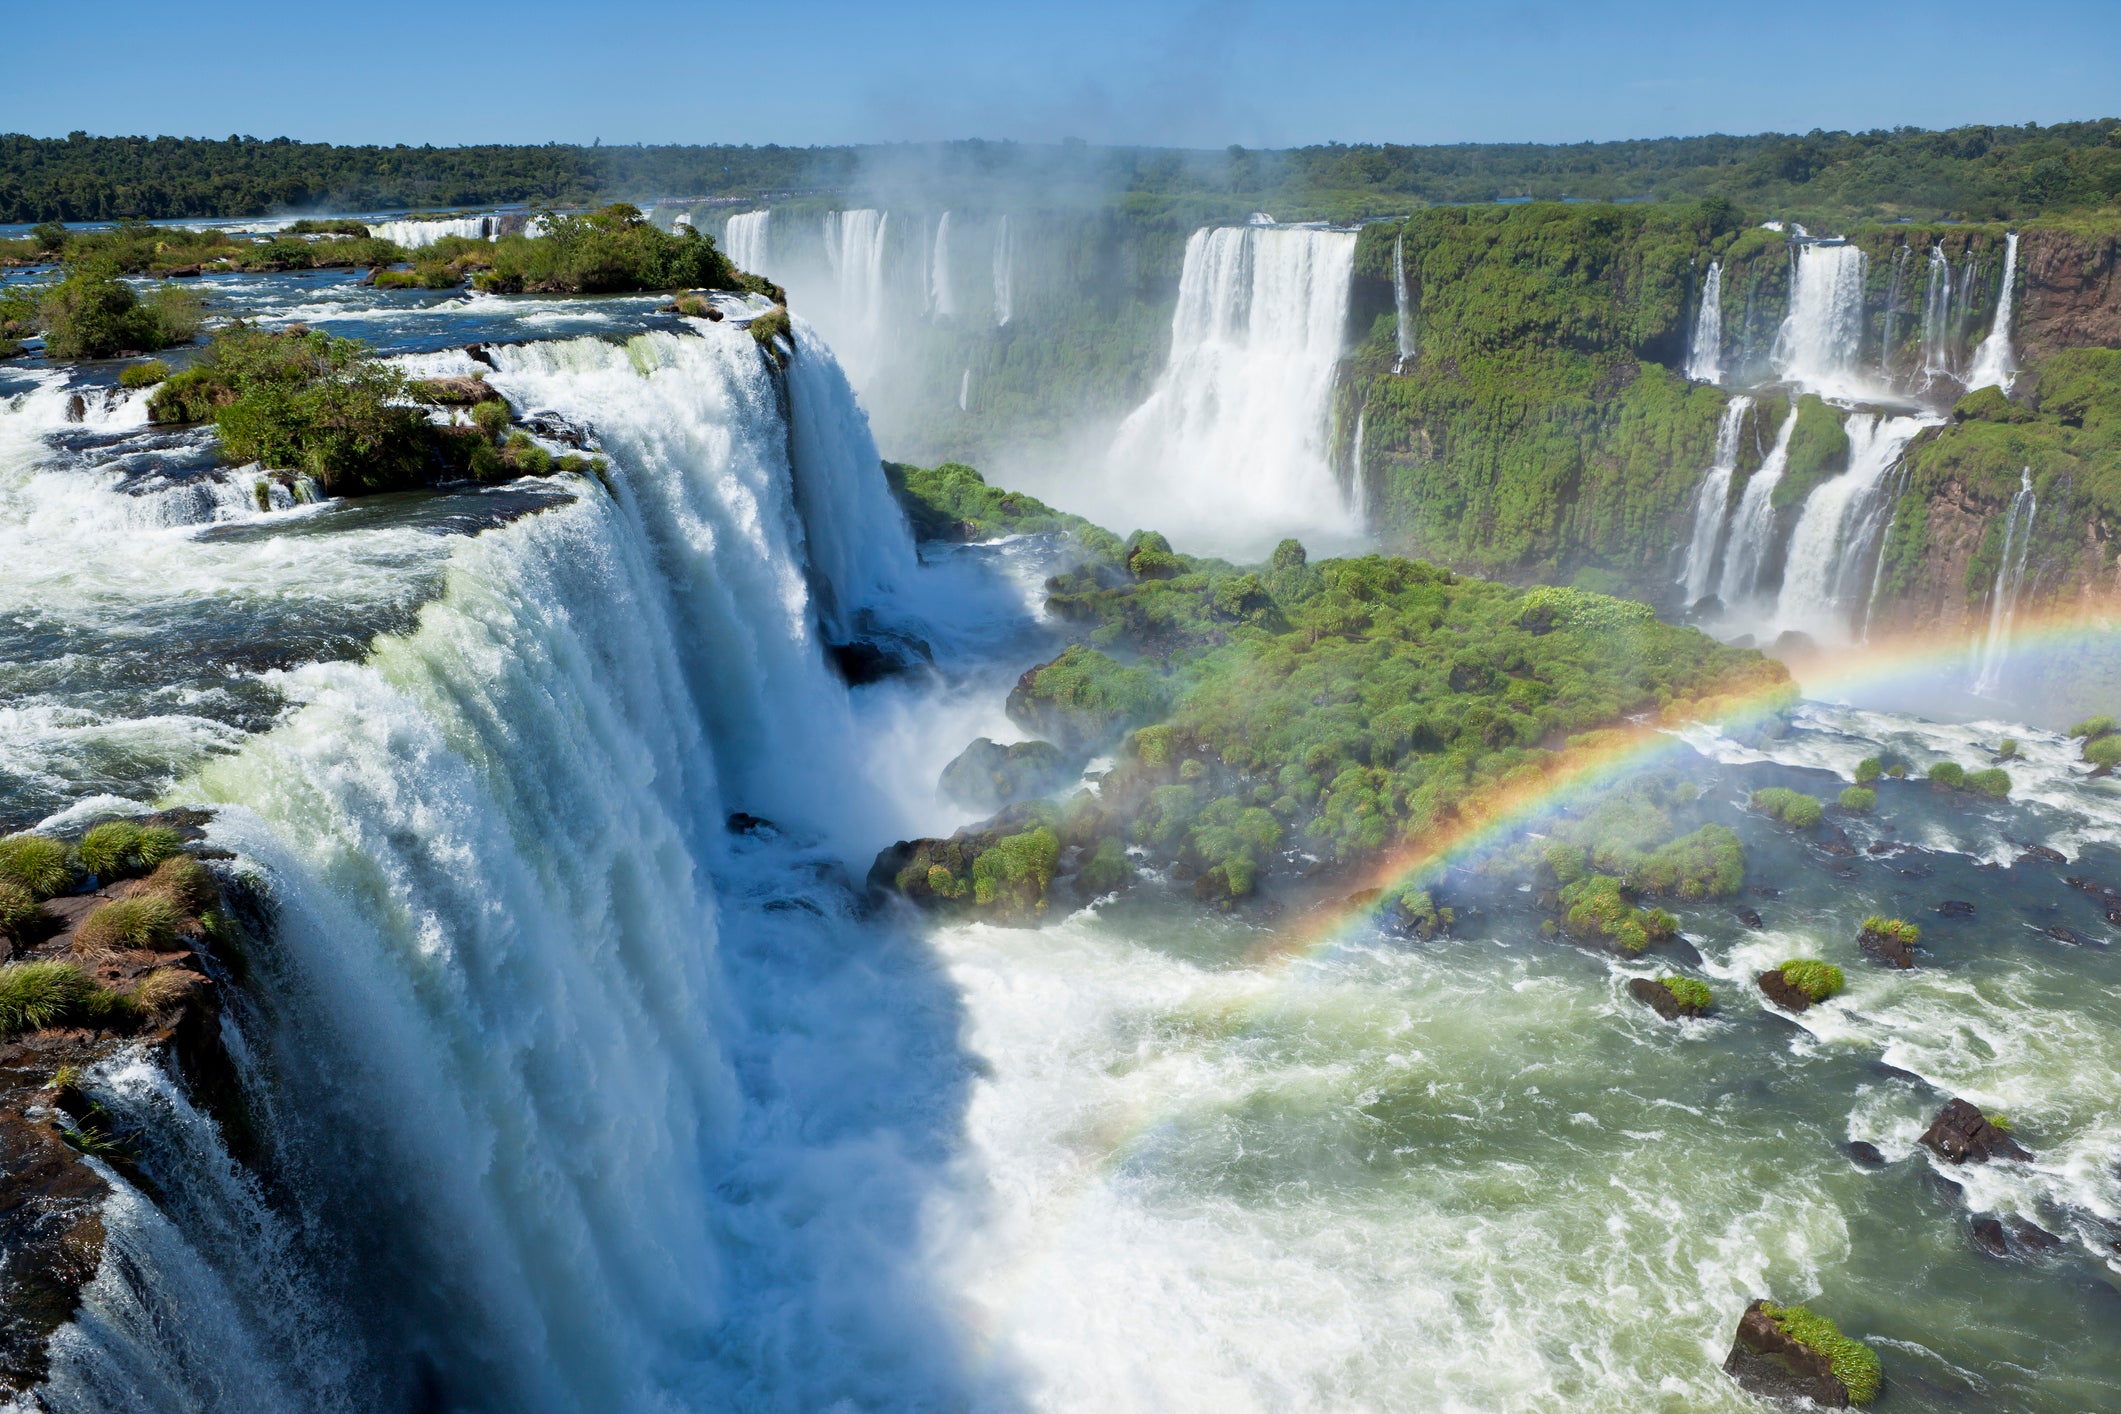 The Iguaçu Falls, Brazil